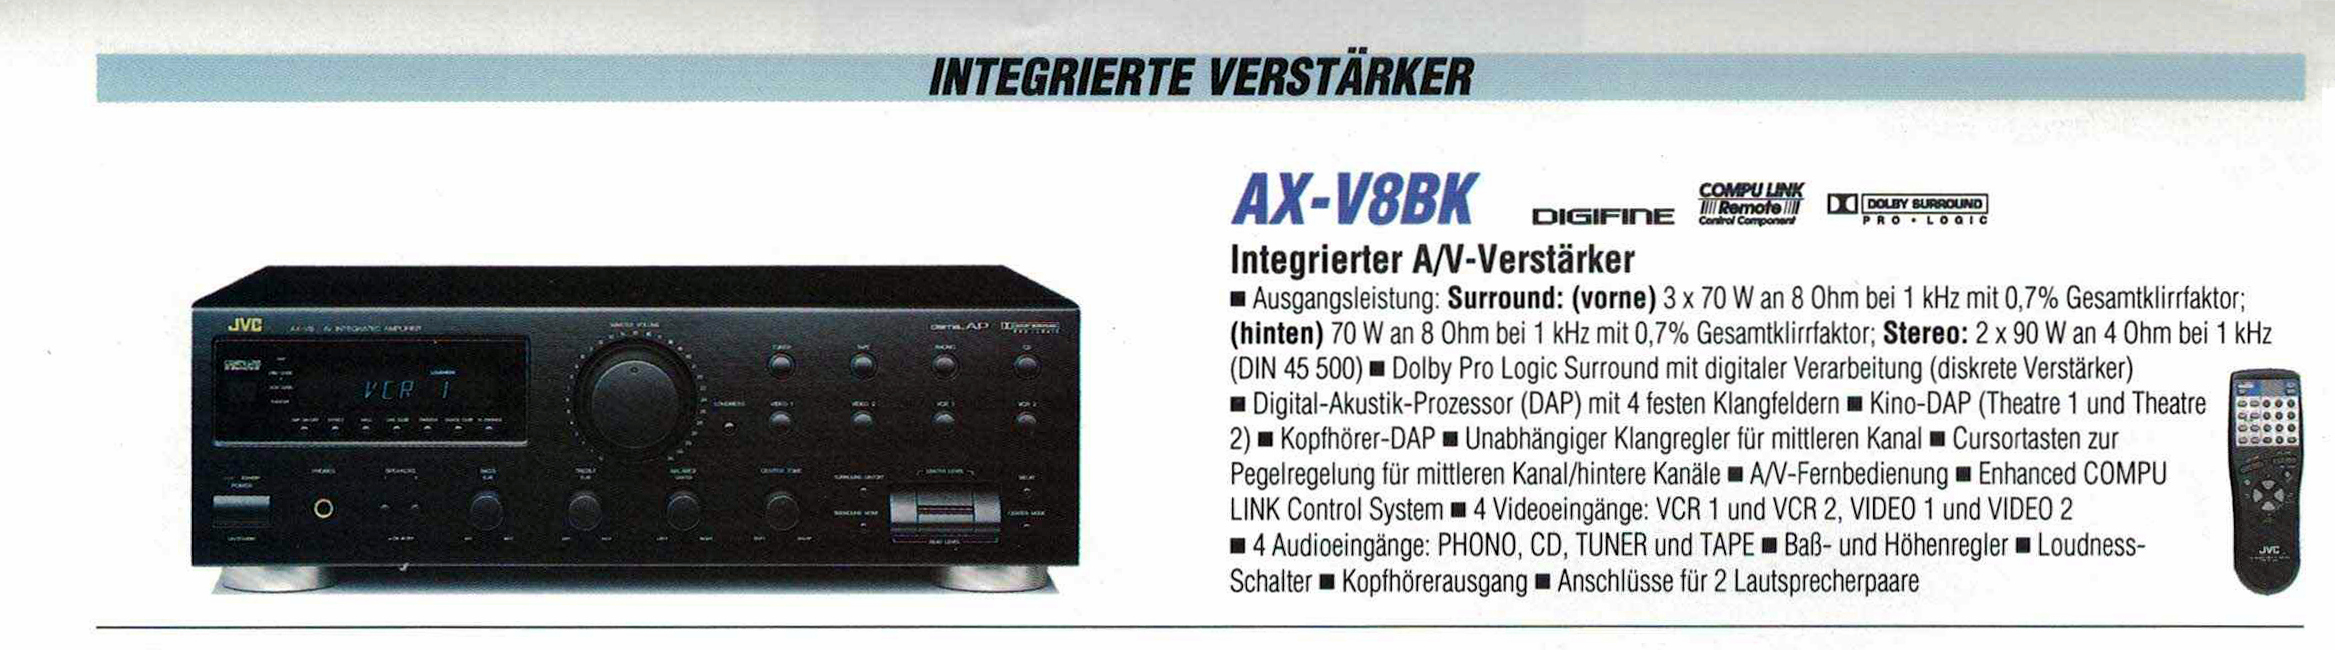 JVC AX-V 8 BK-Prospekt-1997.jpg